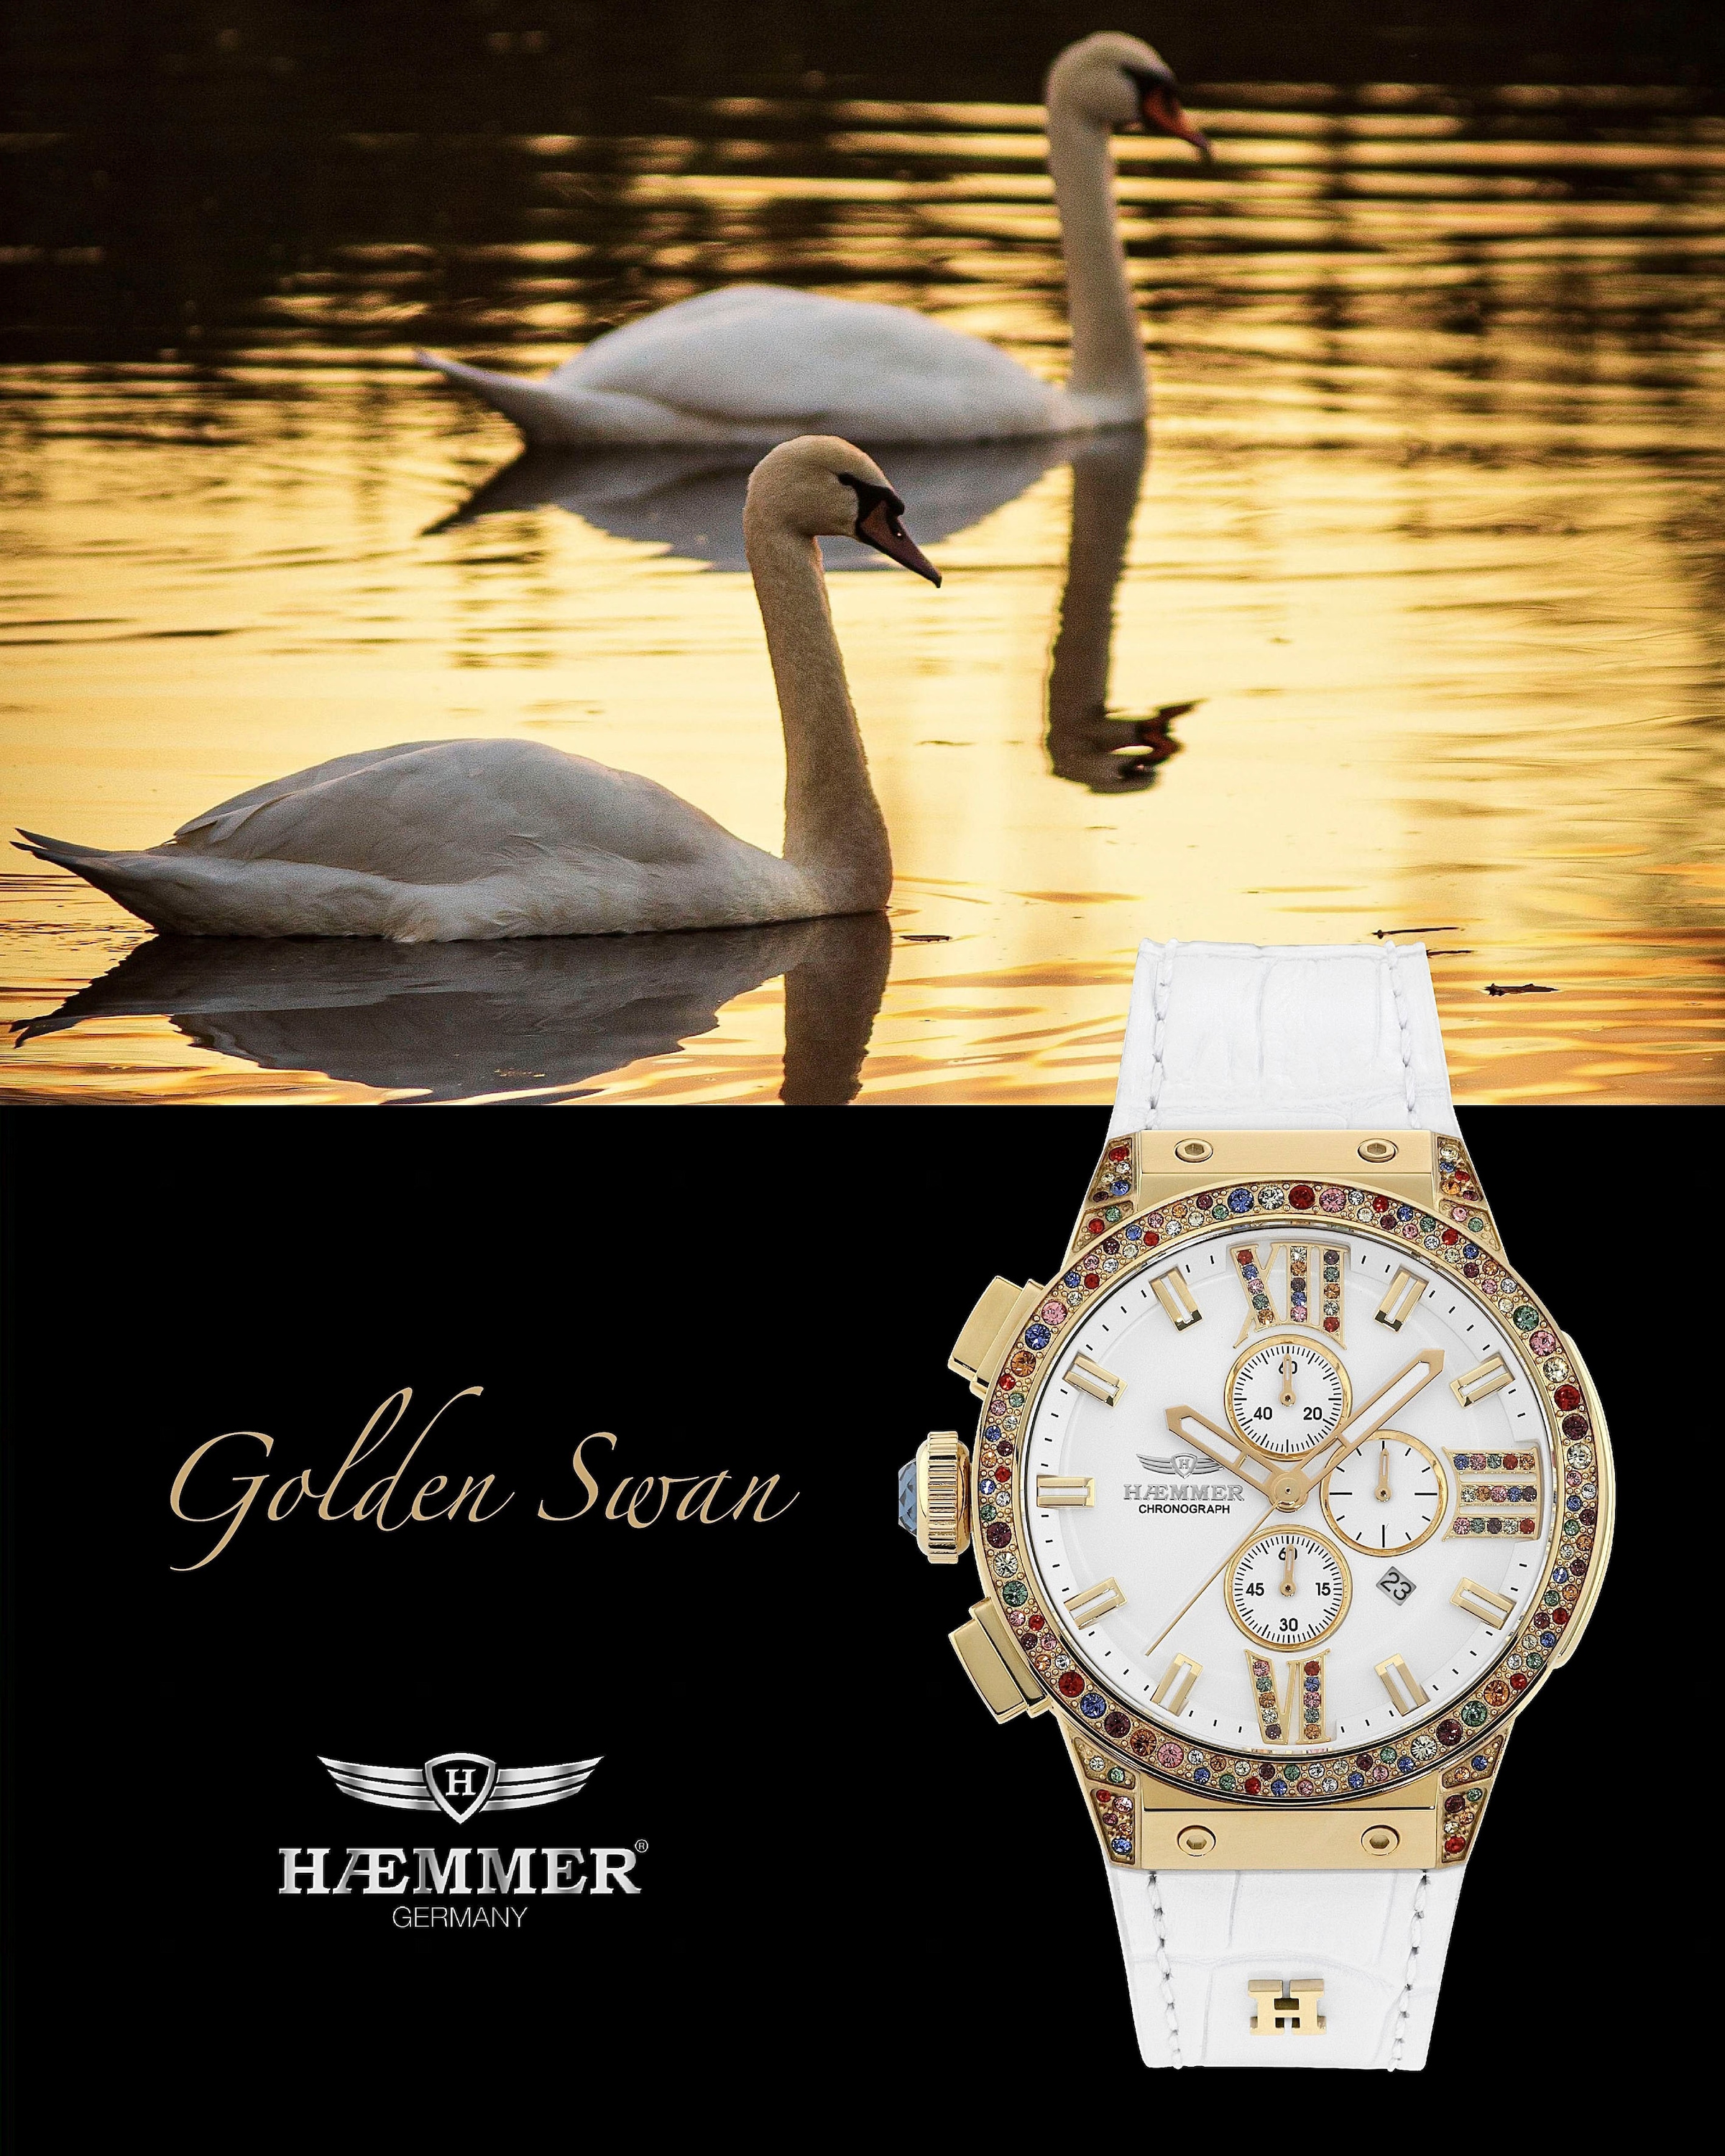 HAEMMER GERMANY Chronograph »GOLDEN SWAN, E-037« kaufen online bei OTTO